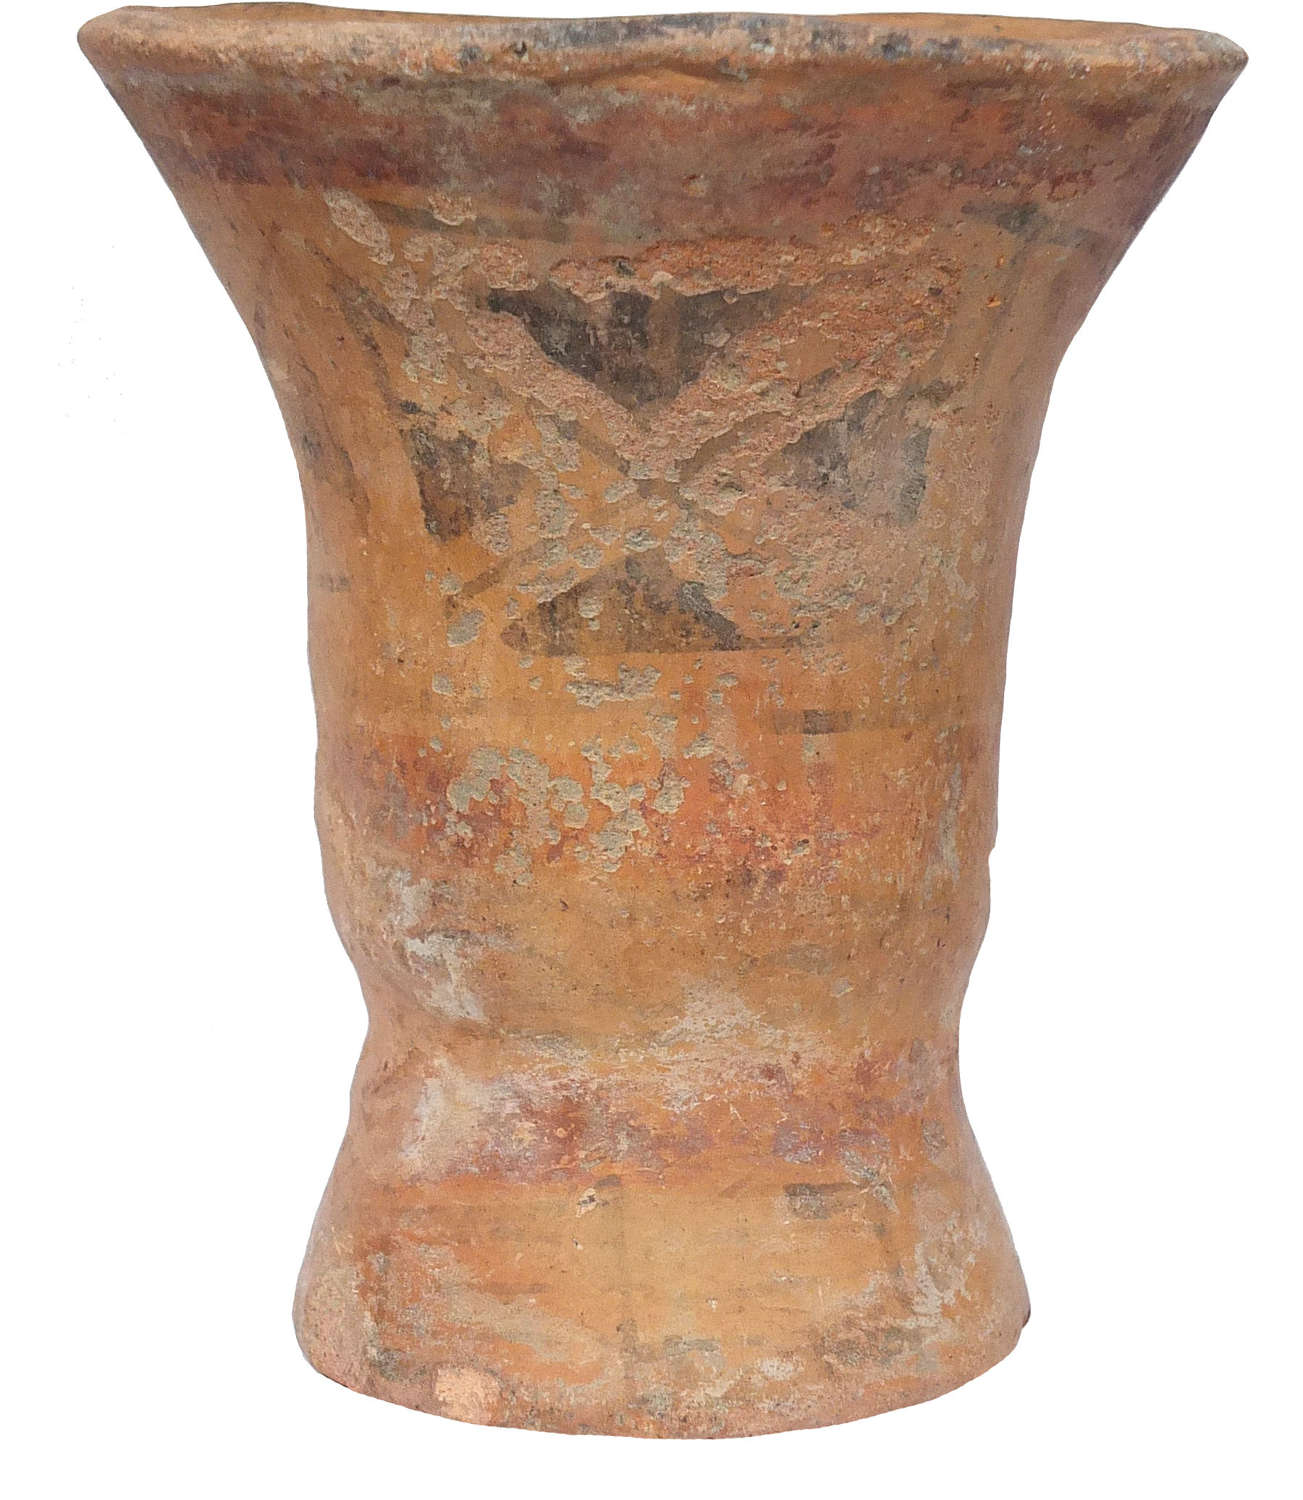 A Bolivian pottery beaker in debased Tiahuanaco style